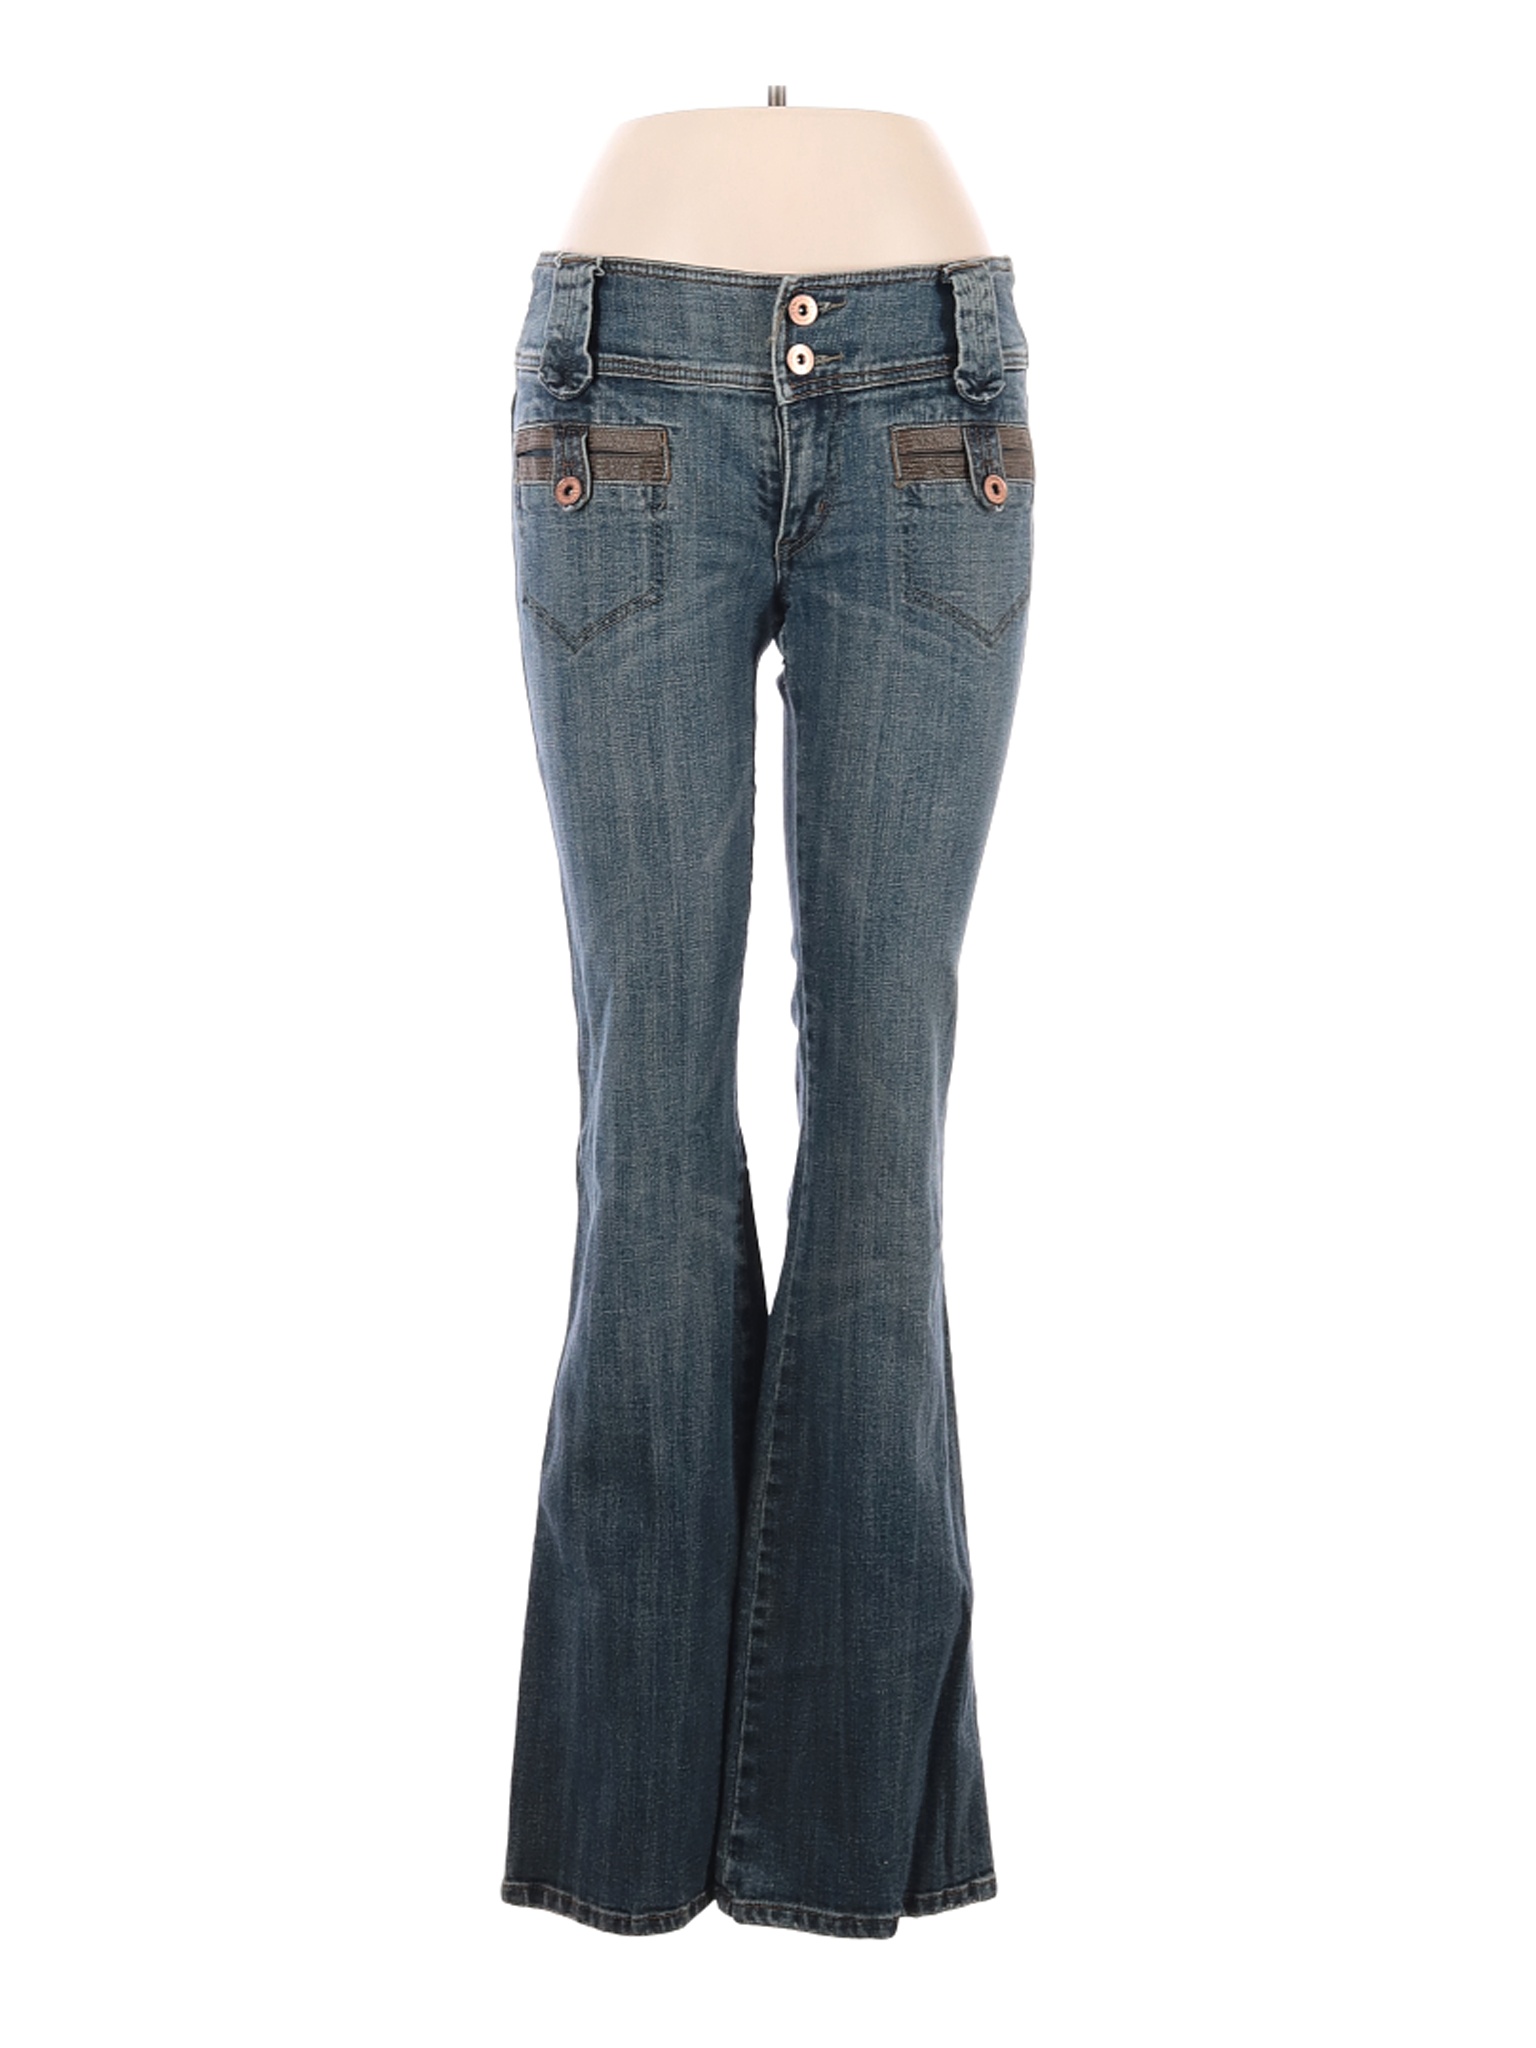 Z.Cavaricci Women Blue Jeans 11 | eBay